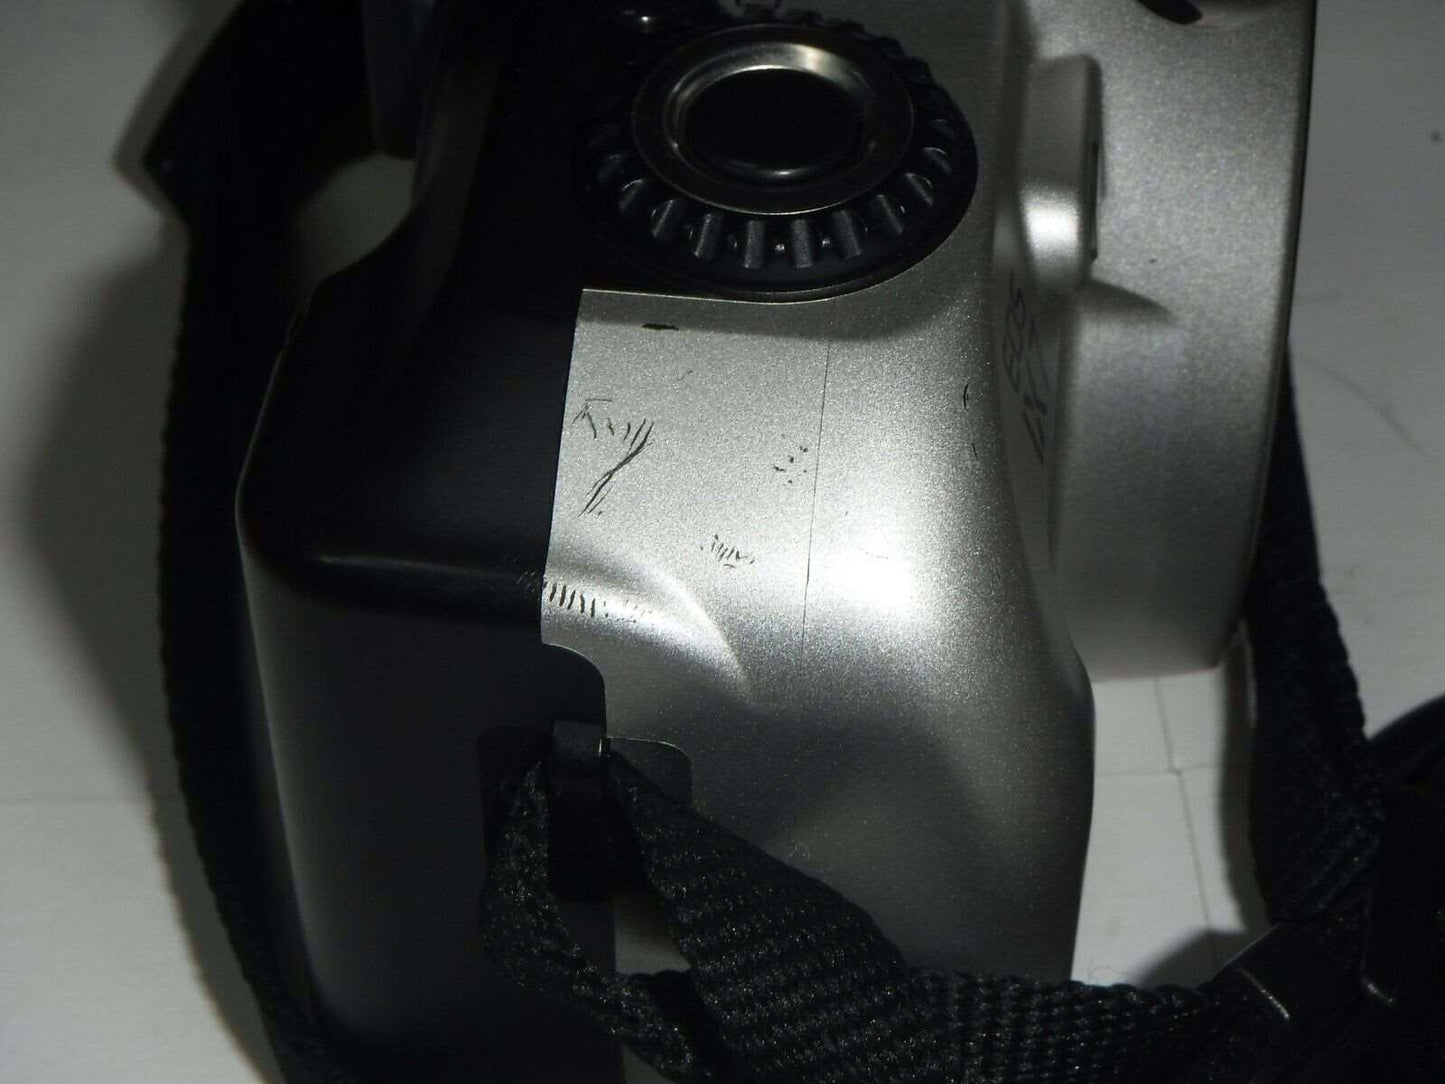 Canon EOS iX7 APS Film SLR Camera Body - Real Collector's Piece